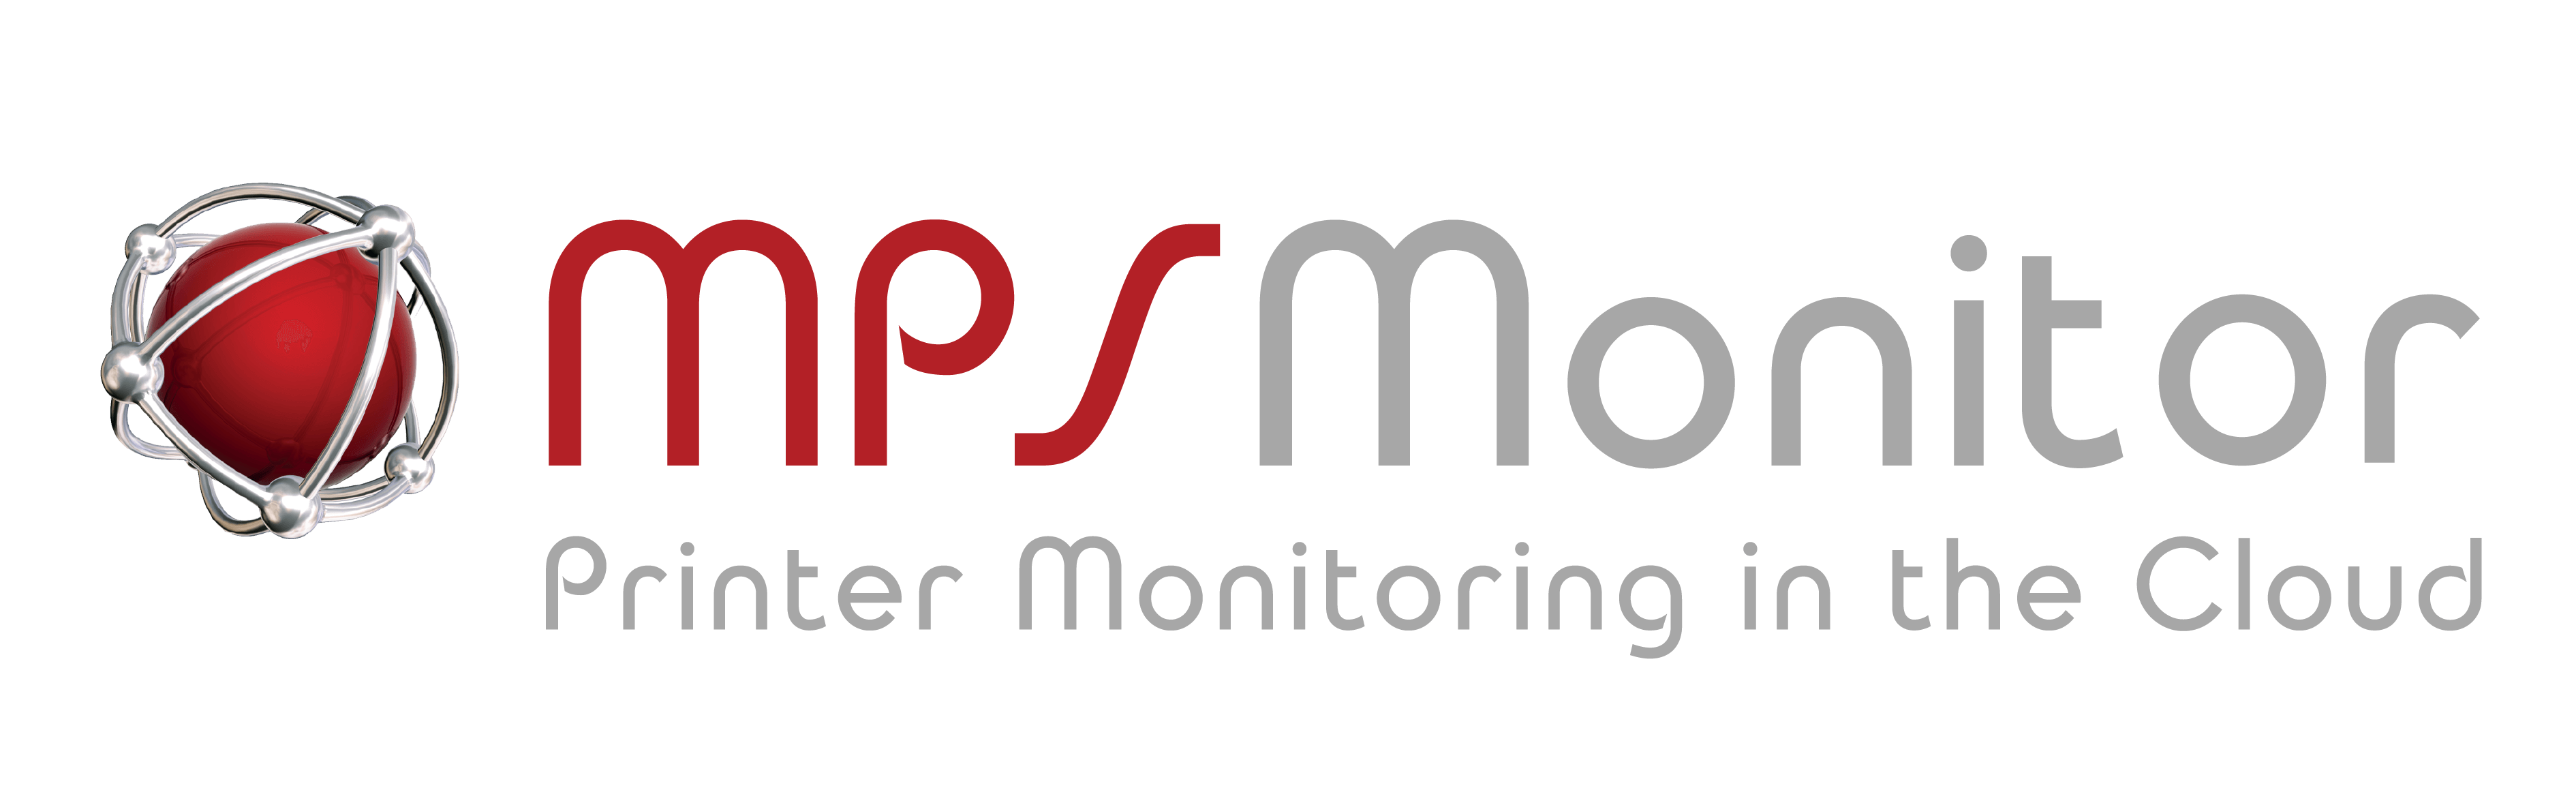 MPS Monitor